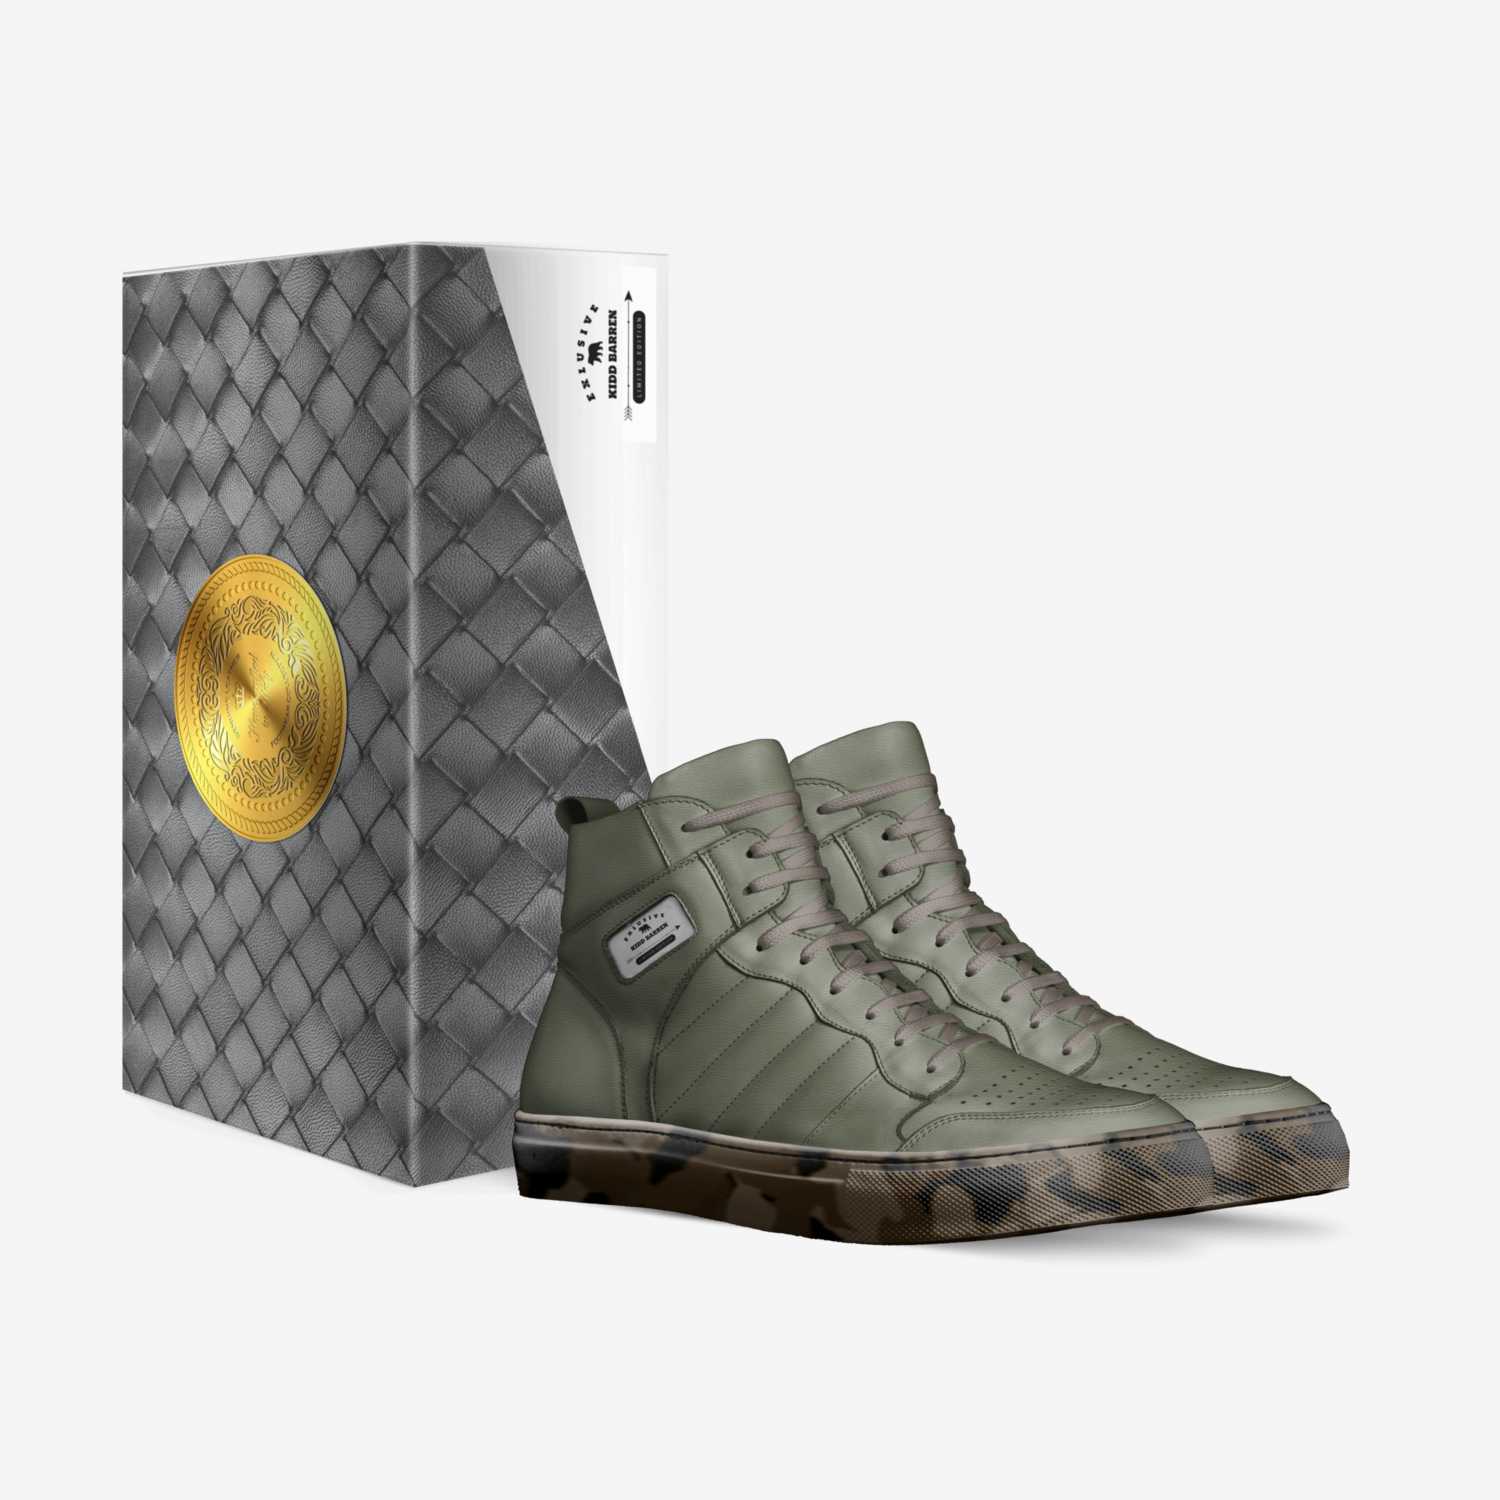 Kidd Barren custom made in Italy shoes by Matt Barren | Box view